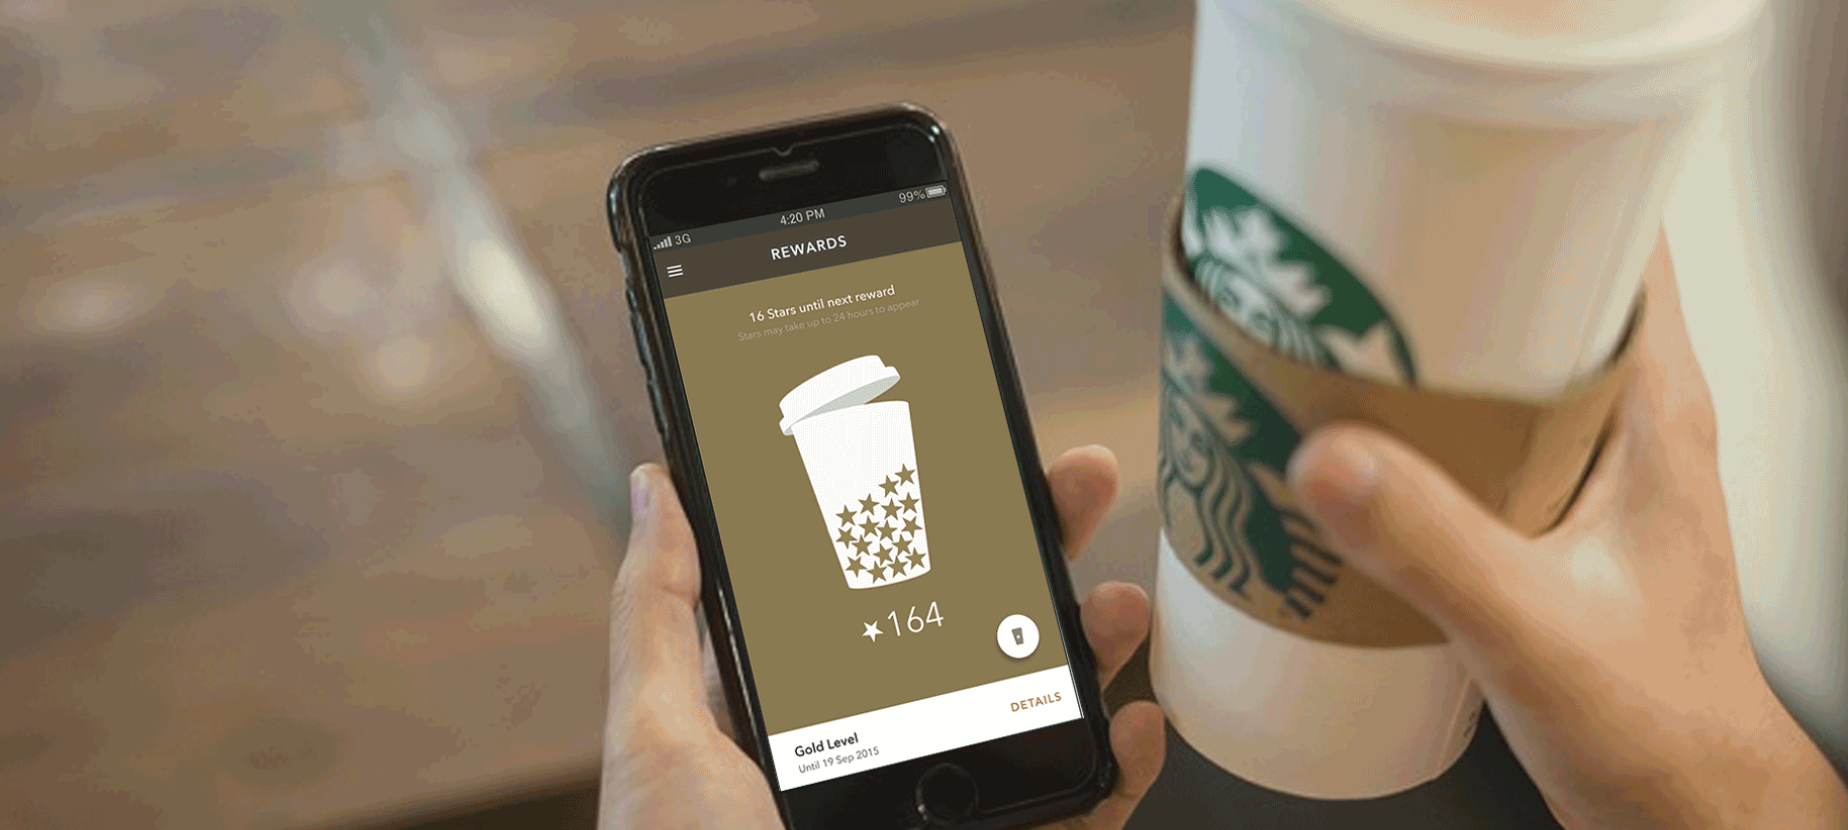 Starbucks App: Sending The Right Offer To The Right User | by tahsin |  Towards Data Science